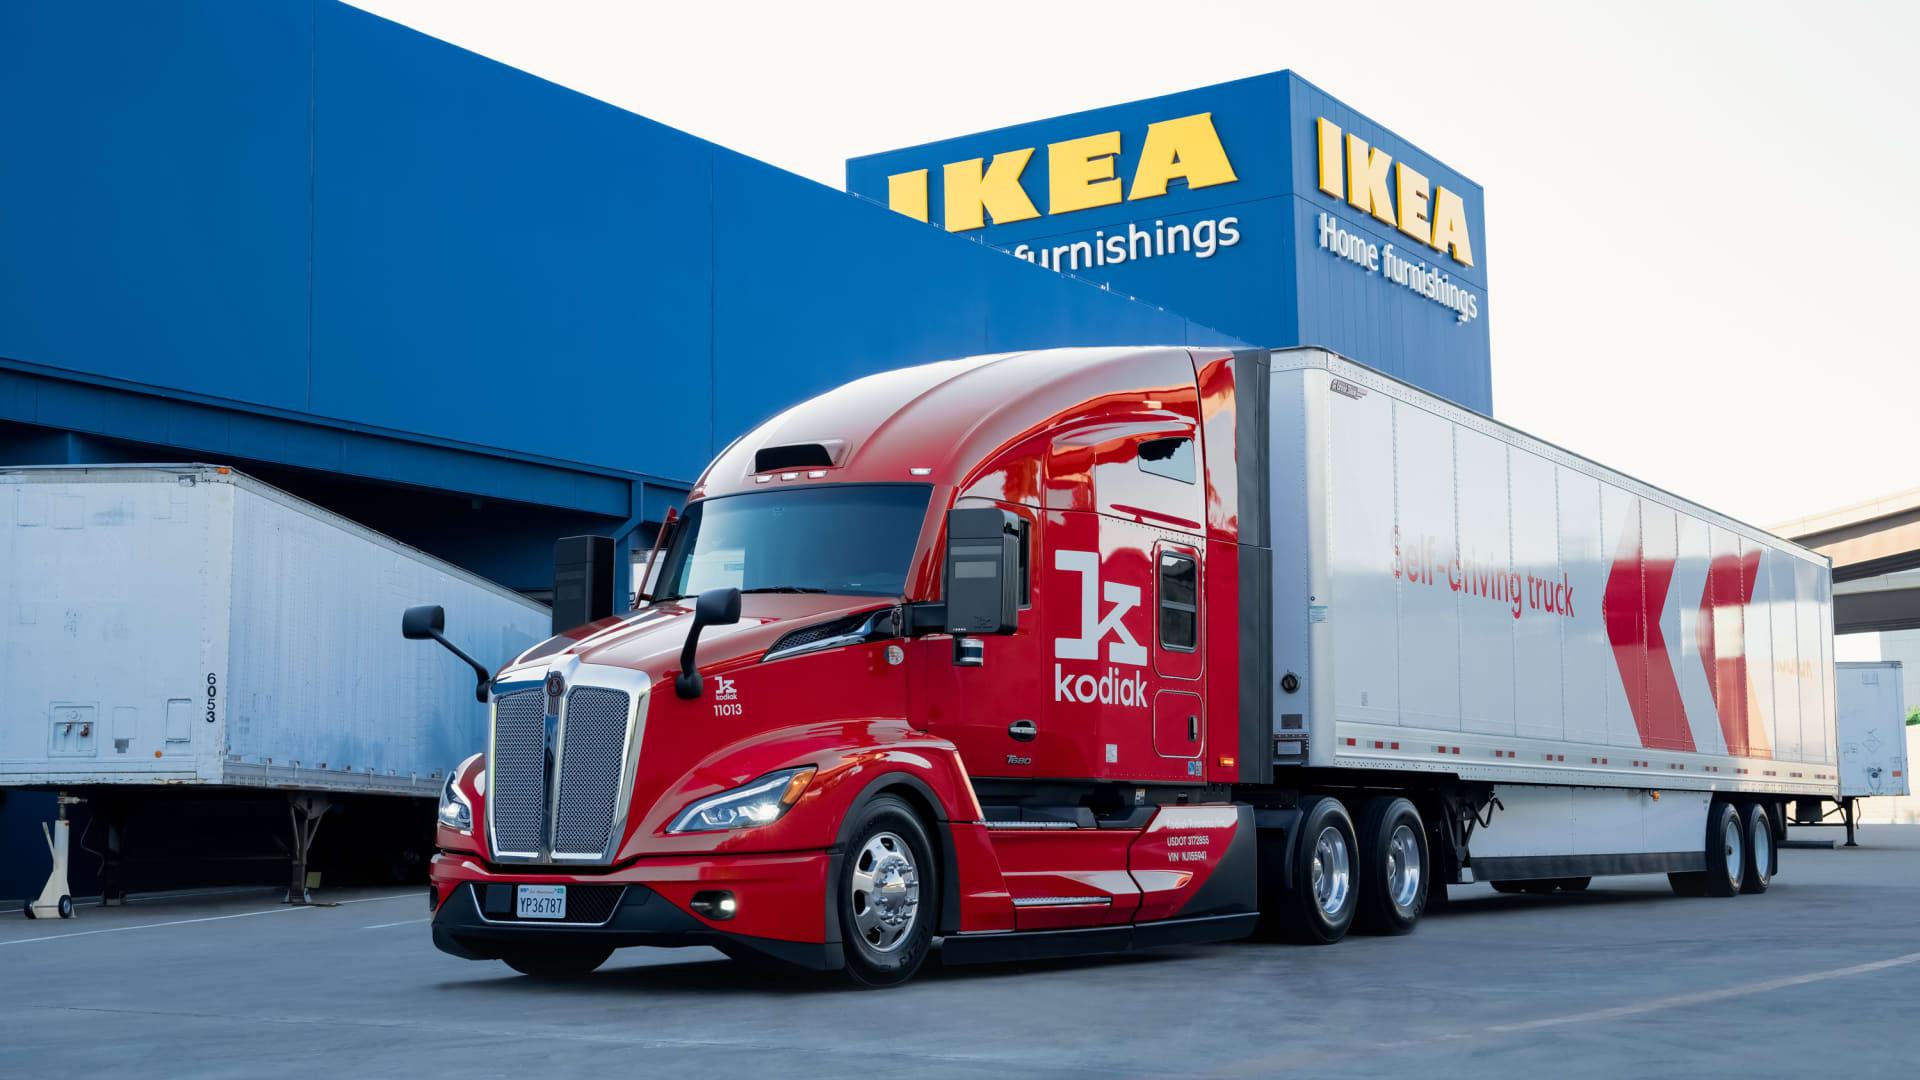 IKEA tests driverless delivery trucks in Texas with Kodiak Robotics